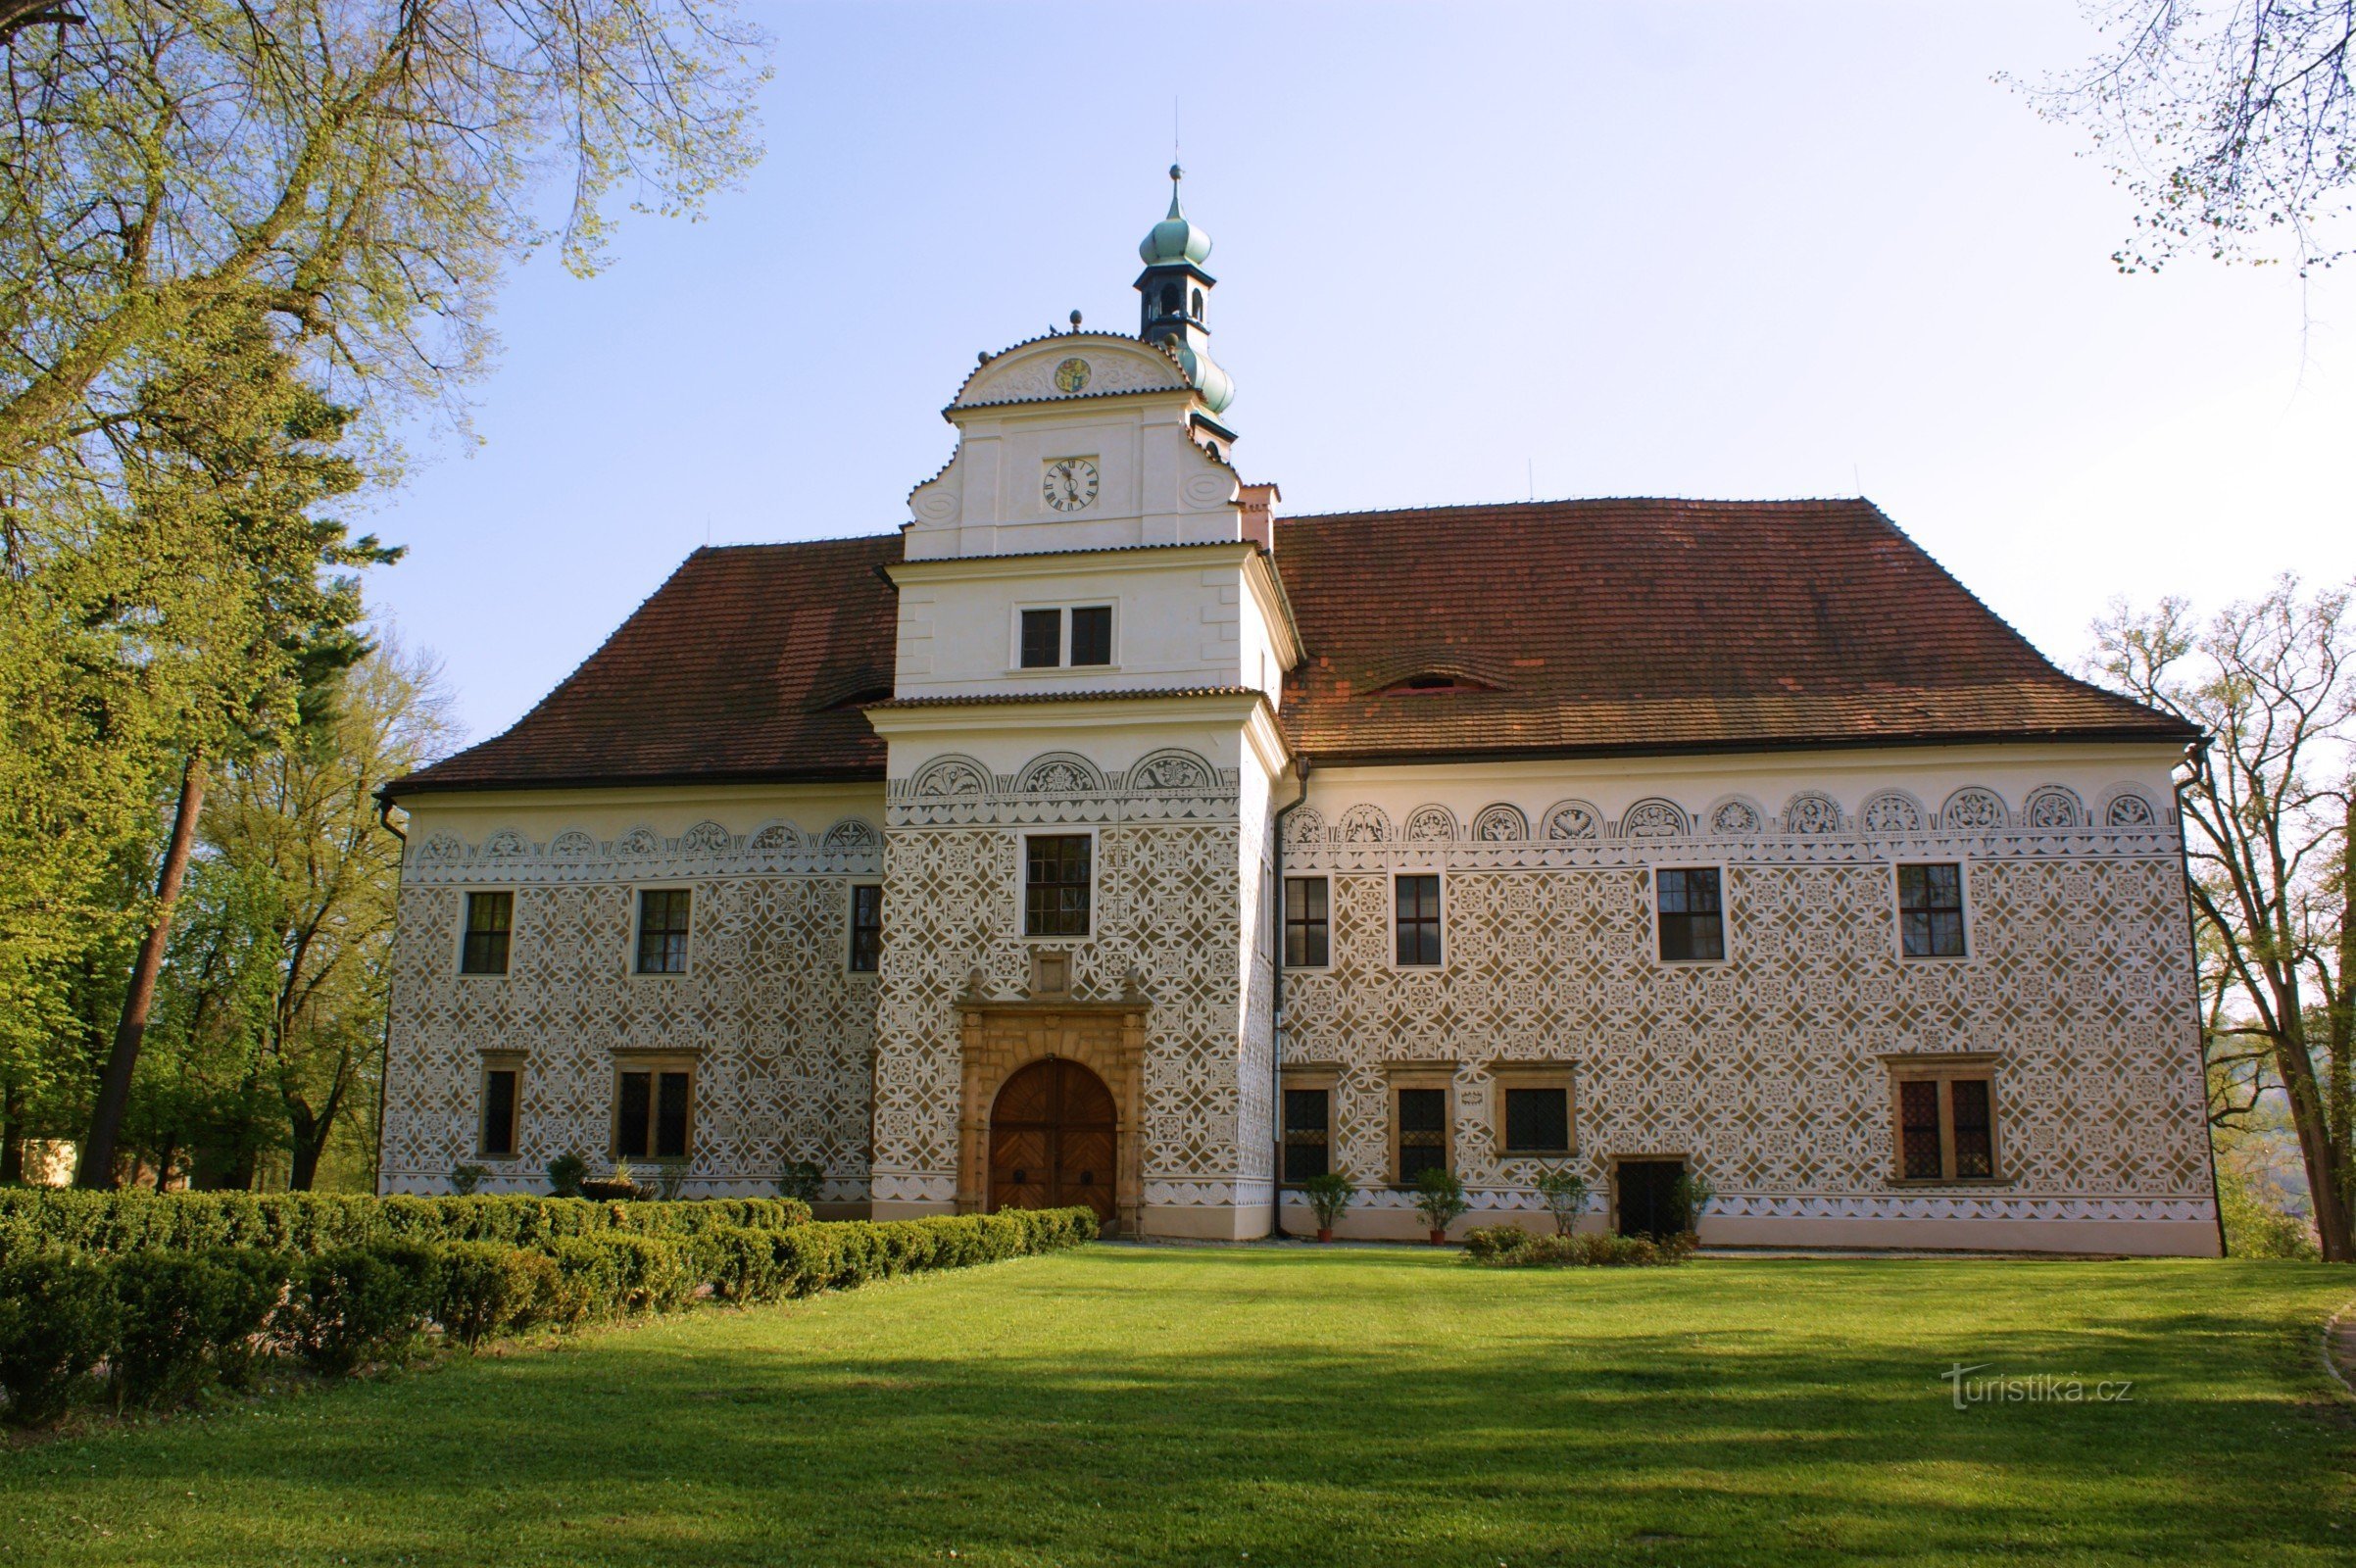 Château Doudleby nad Orlicí un joyau de la Bohême orientale